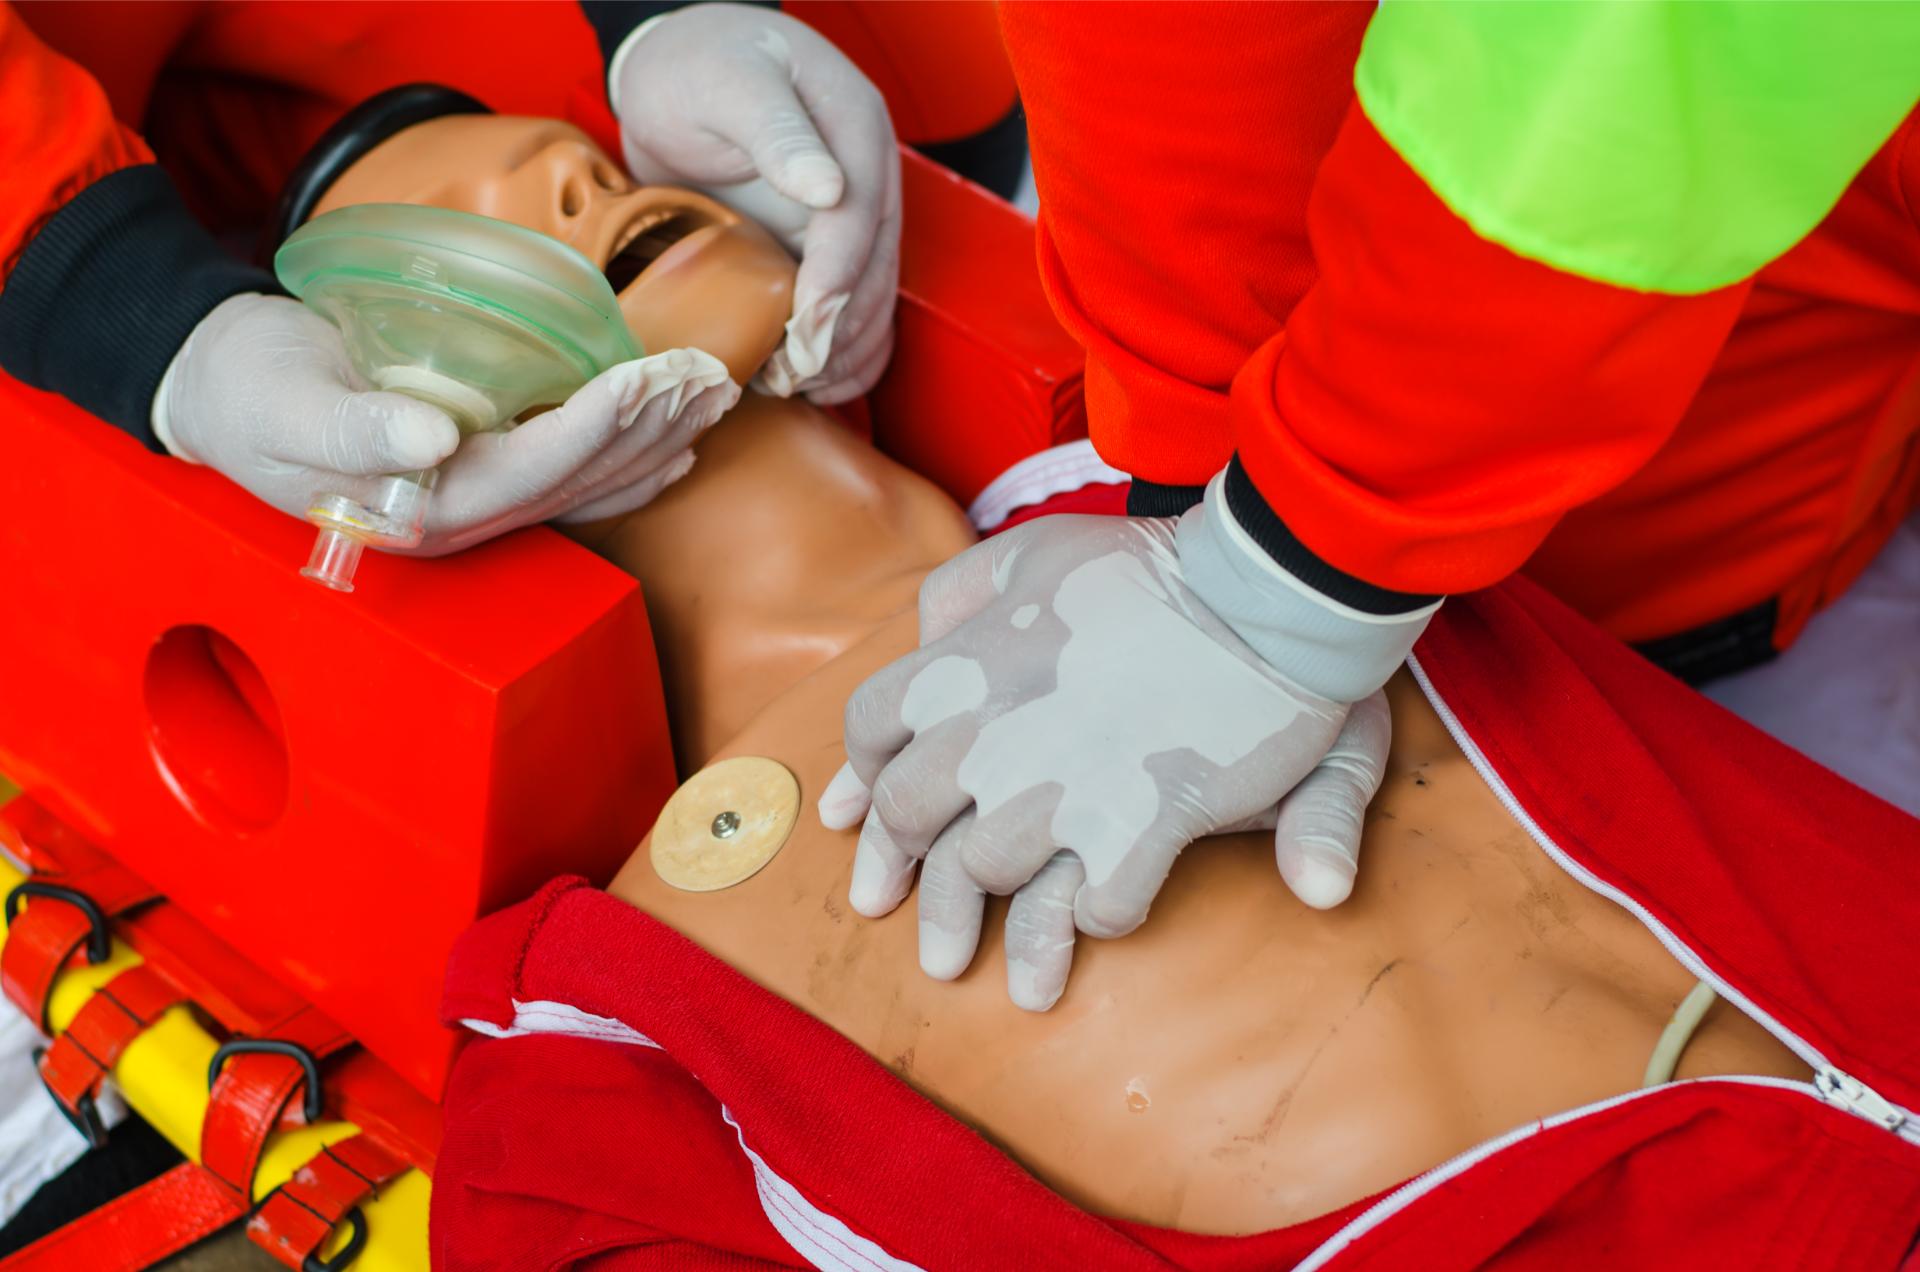 Lifesaving simulation with mannequins